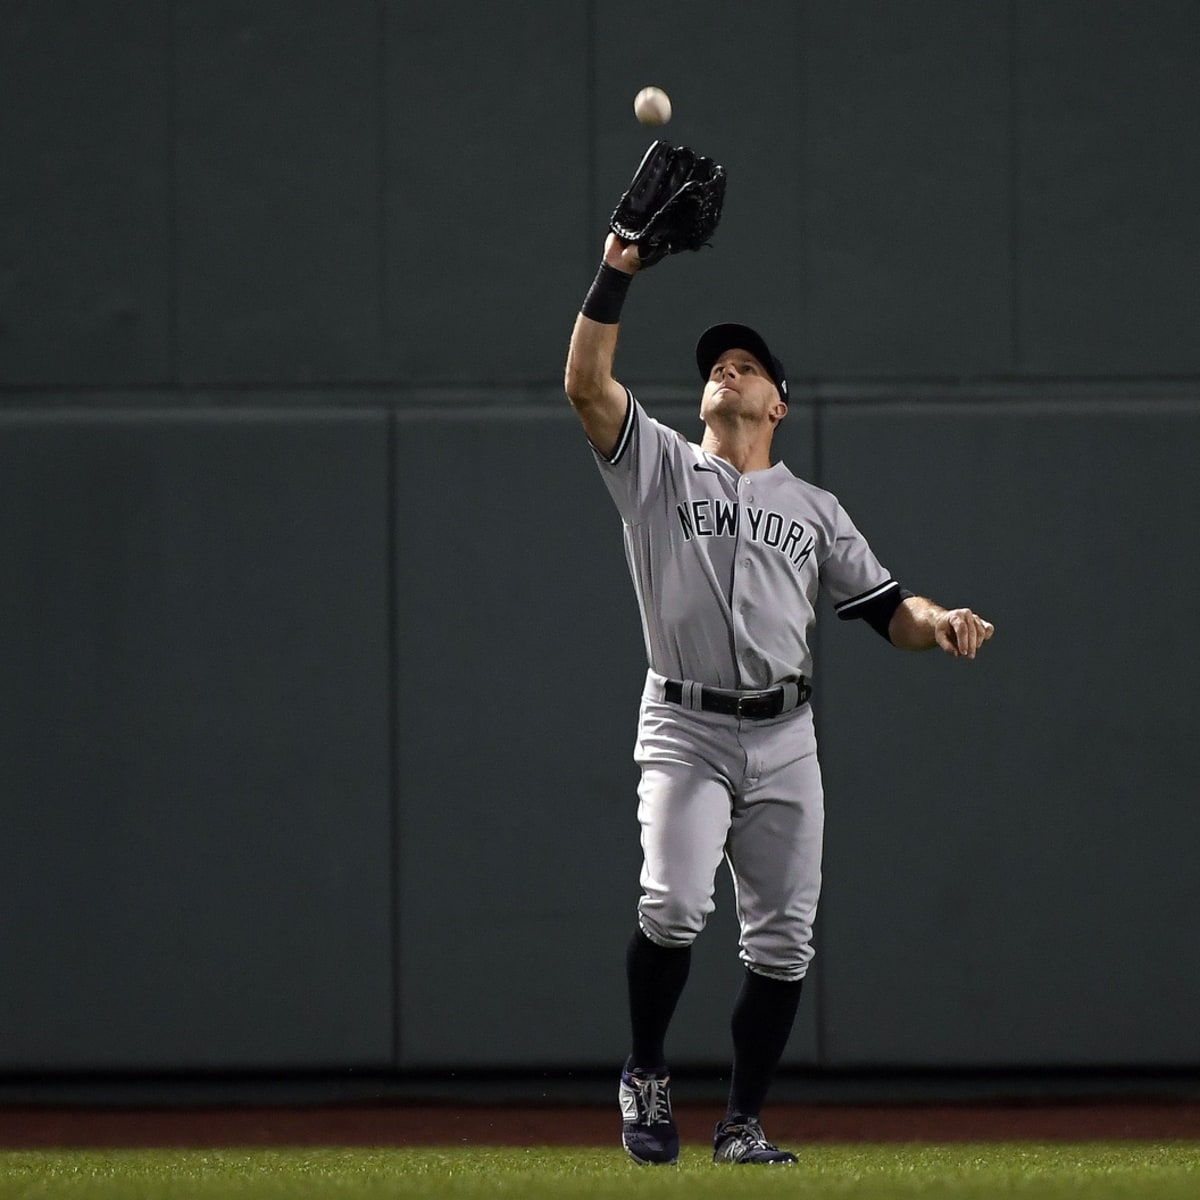 Yankees: Should Brett Gardner Have His Number Retired? - Unhinged New York